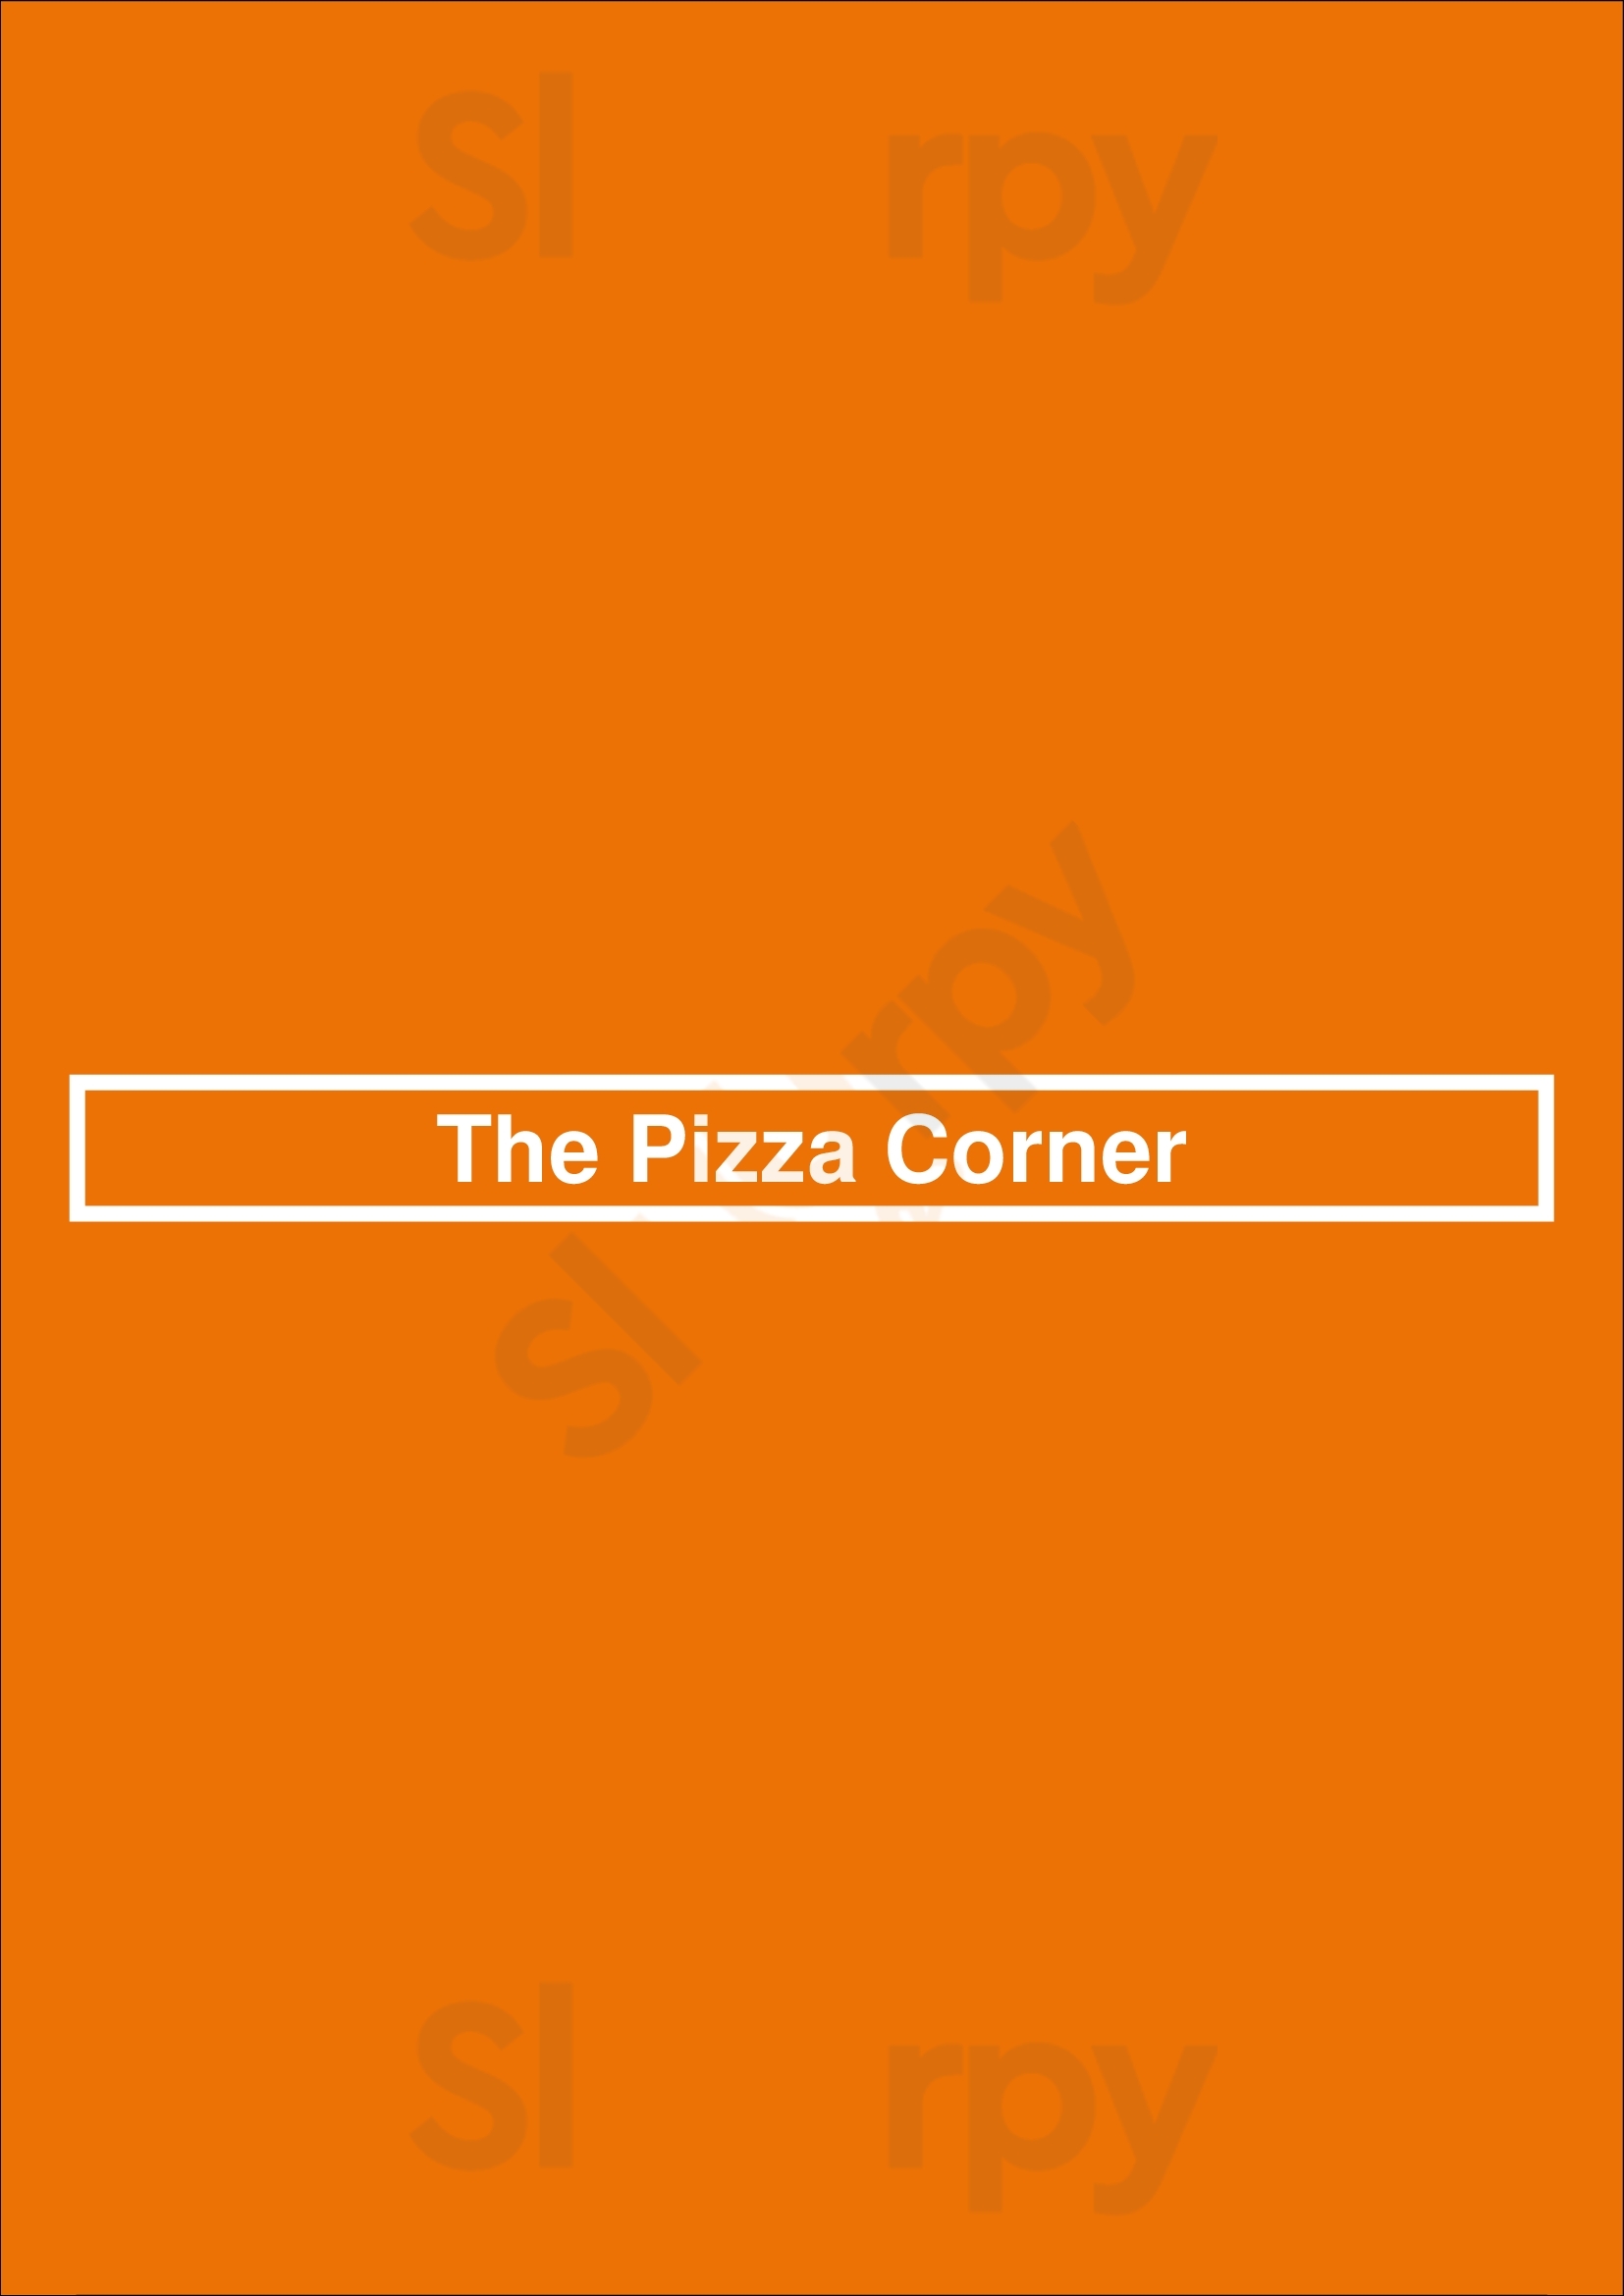 The Pizza Corner Chicago Menu - 1